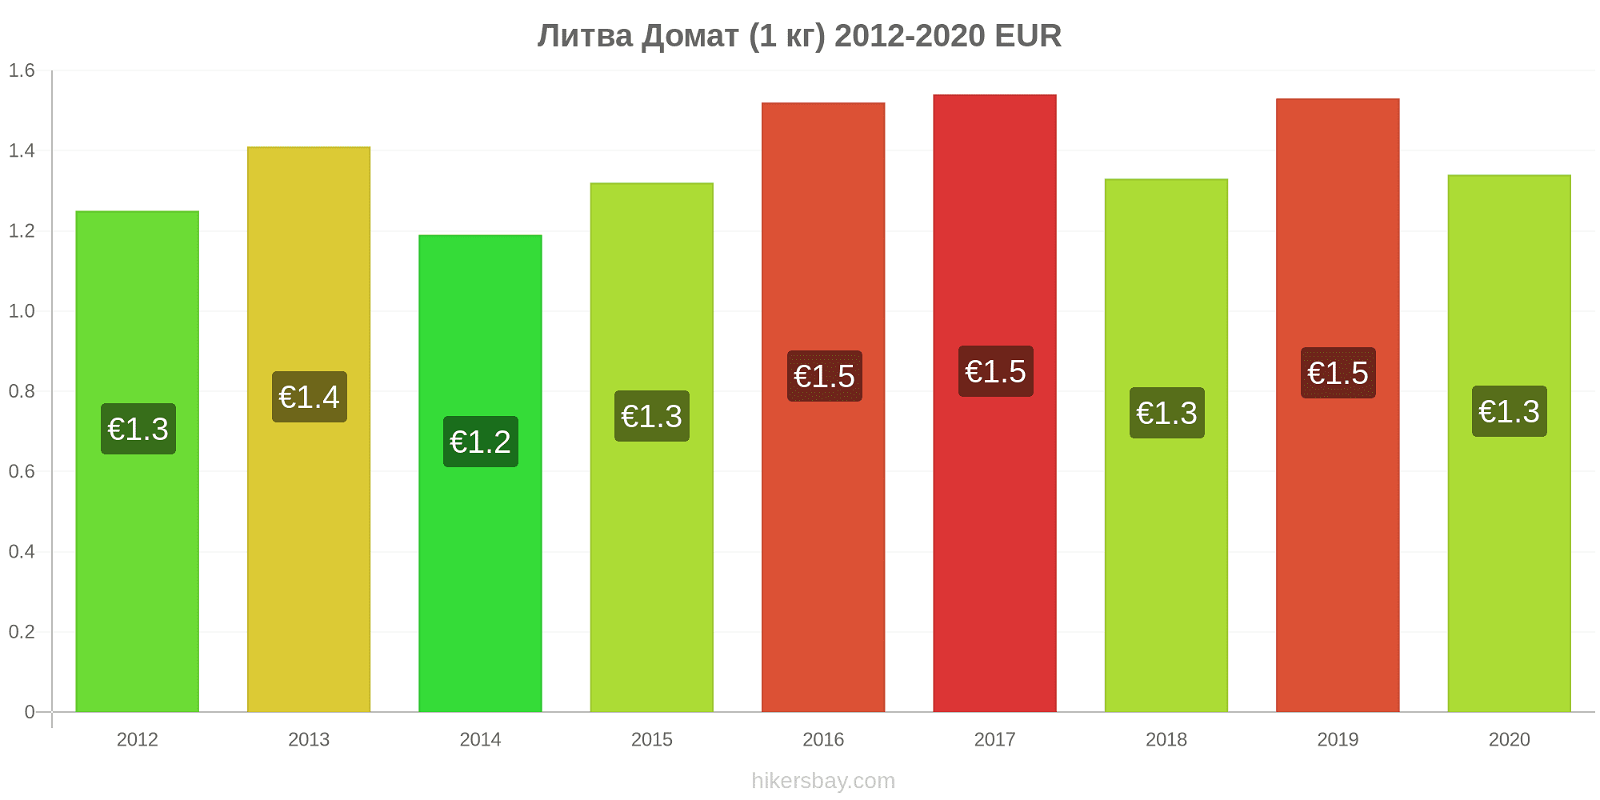 Литва ценови промени Домат (1 кг) hikersbay.com